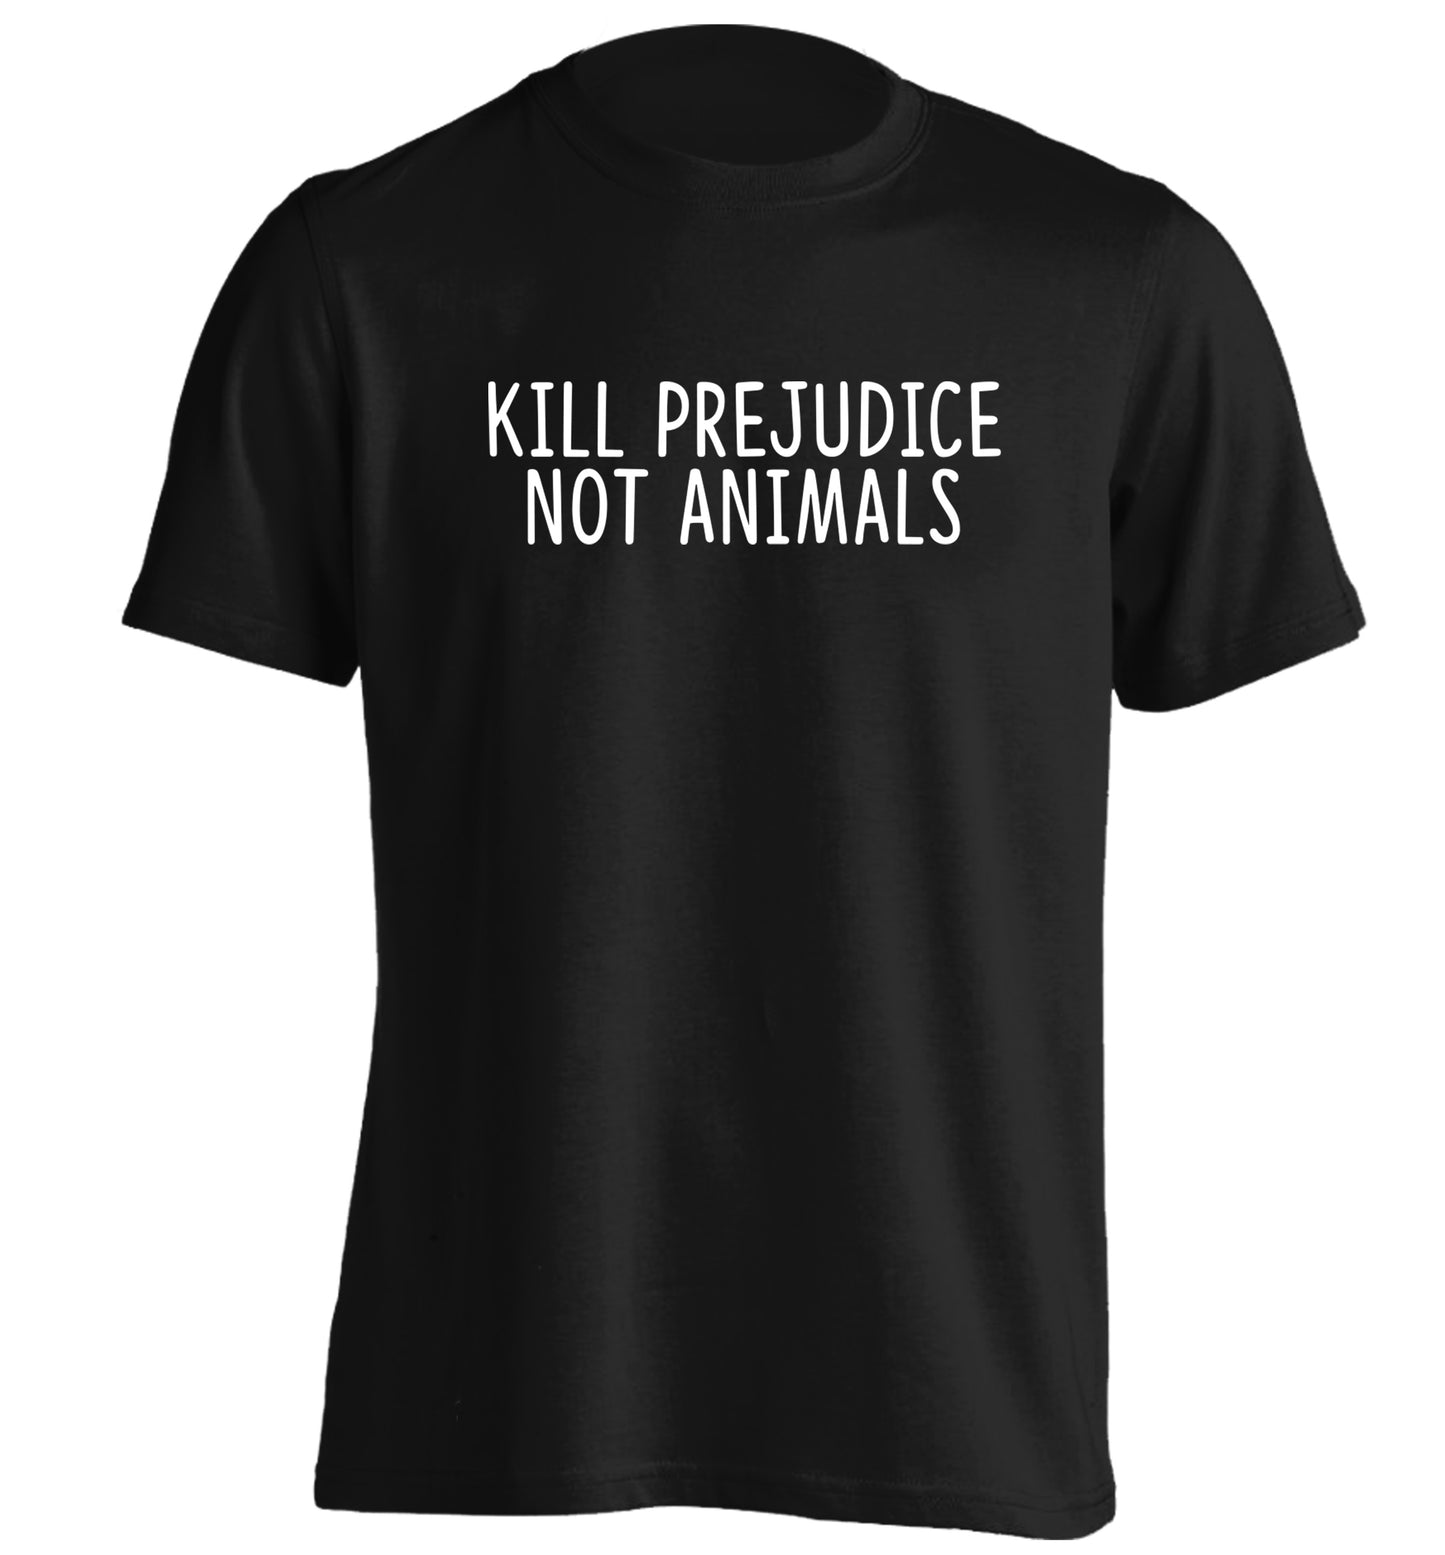 Kill Prejudice Not Animals adults unisex black Tshirt 2XL